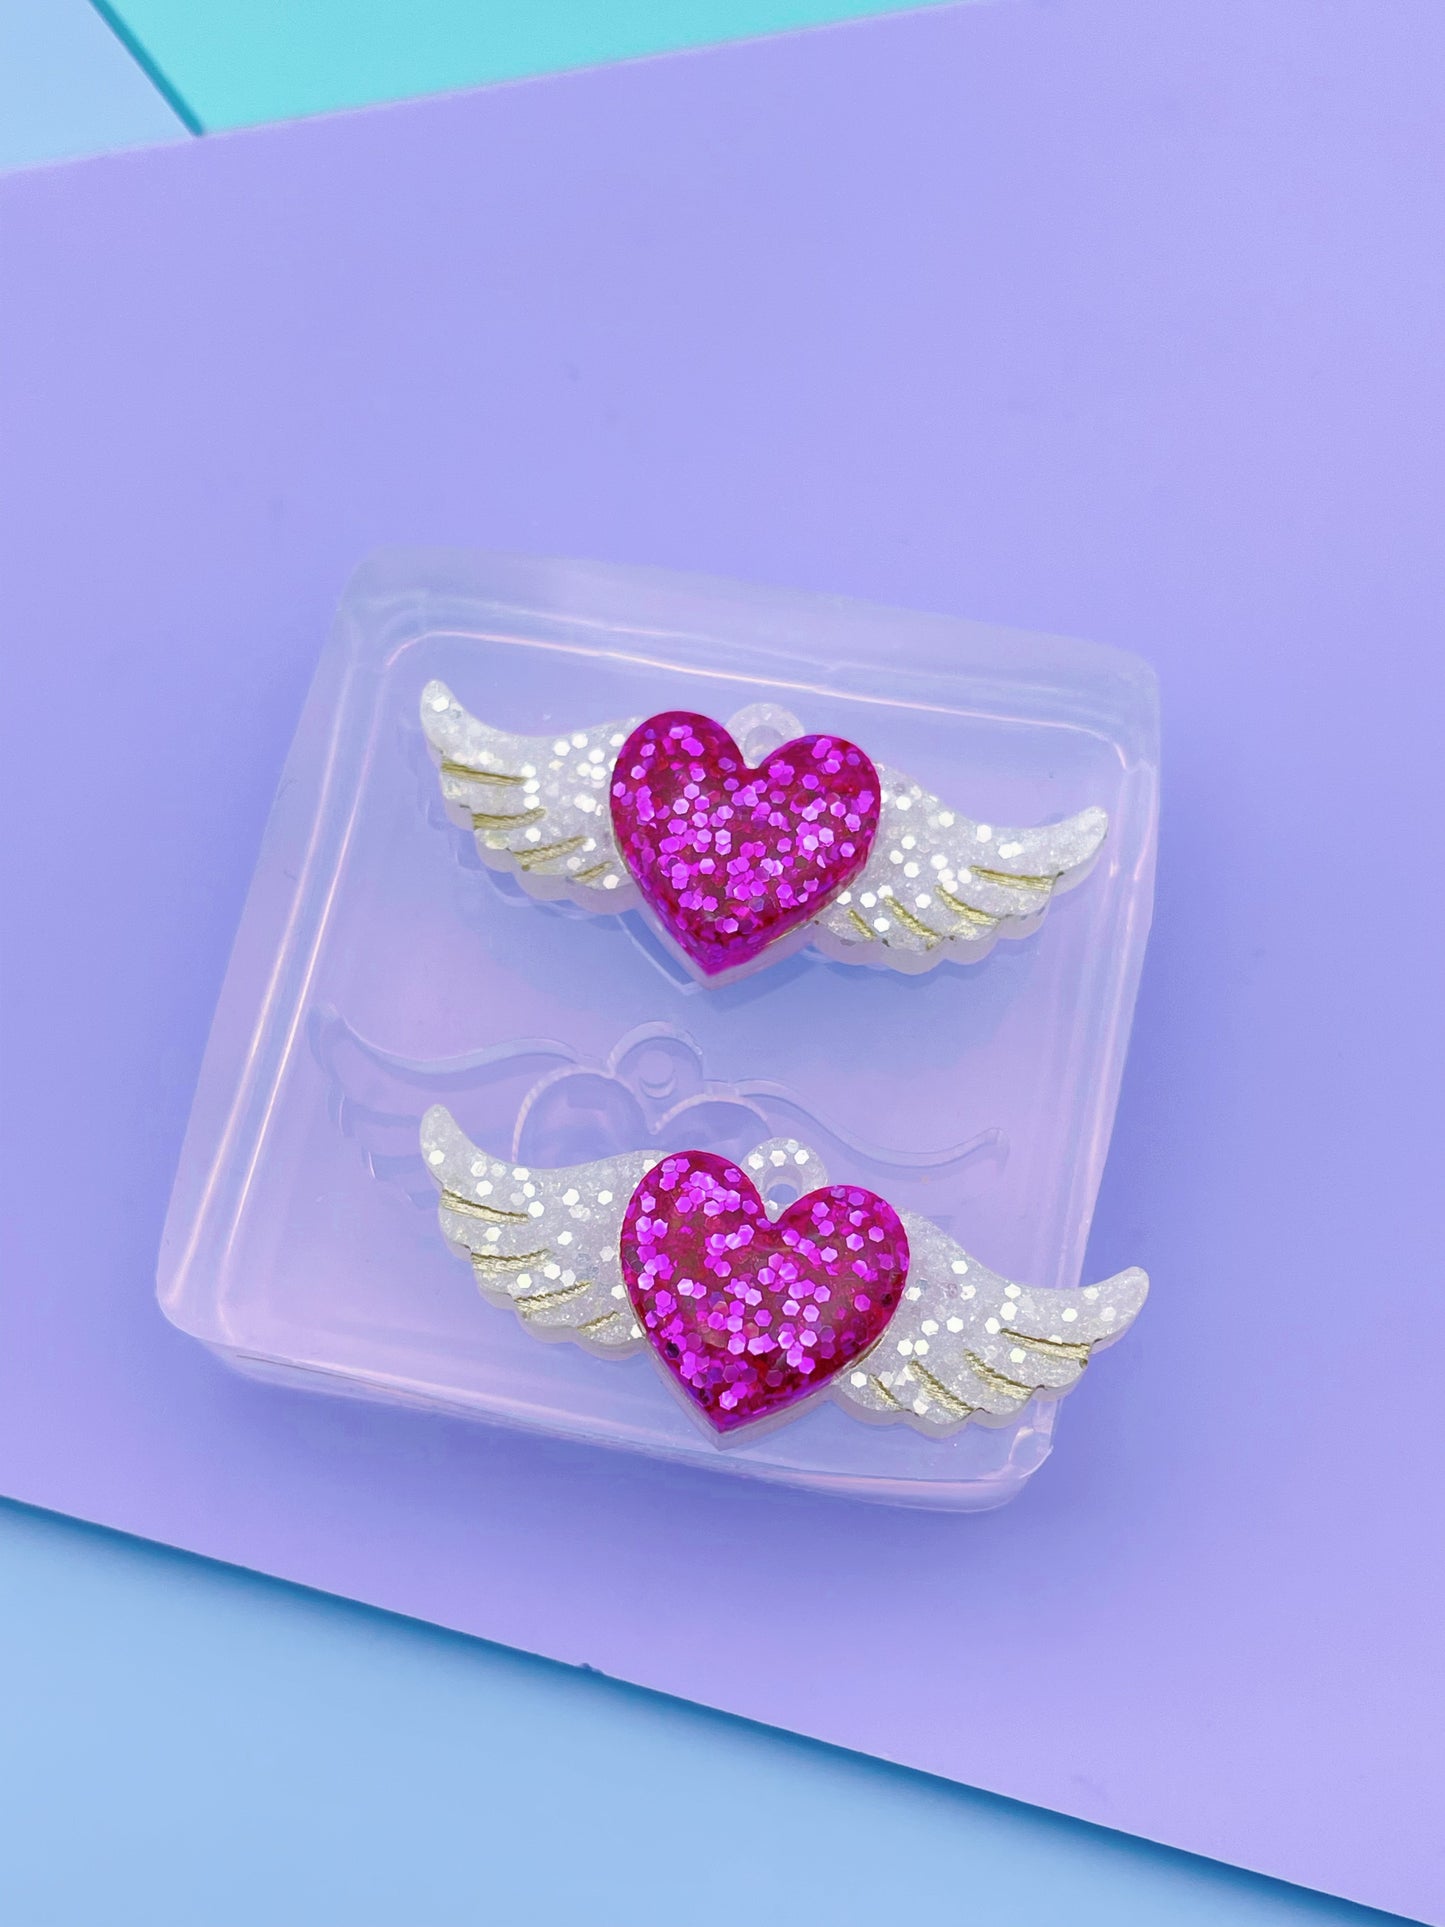 3.5 cm Flying Winged Heart Dangle Earring Mold